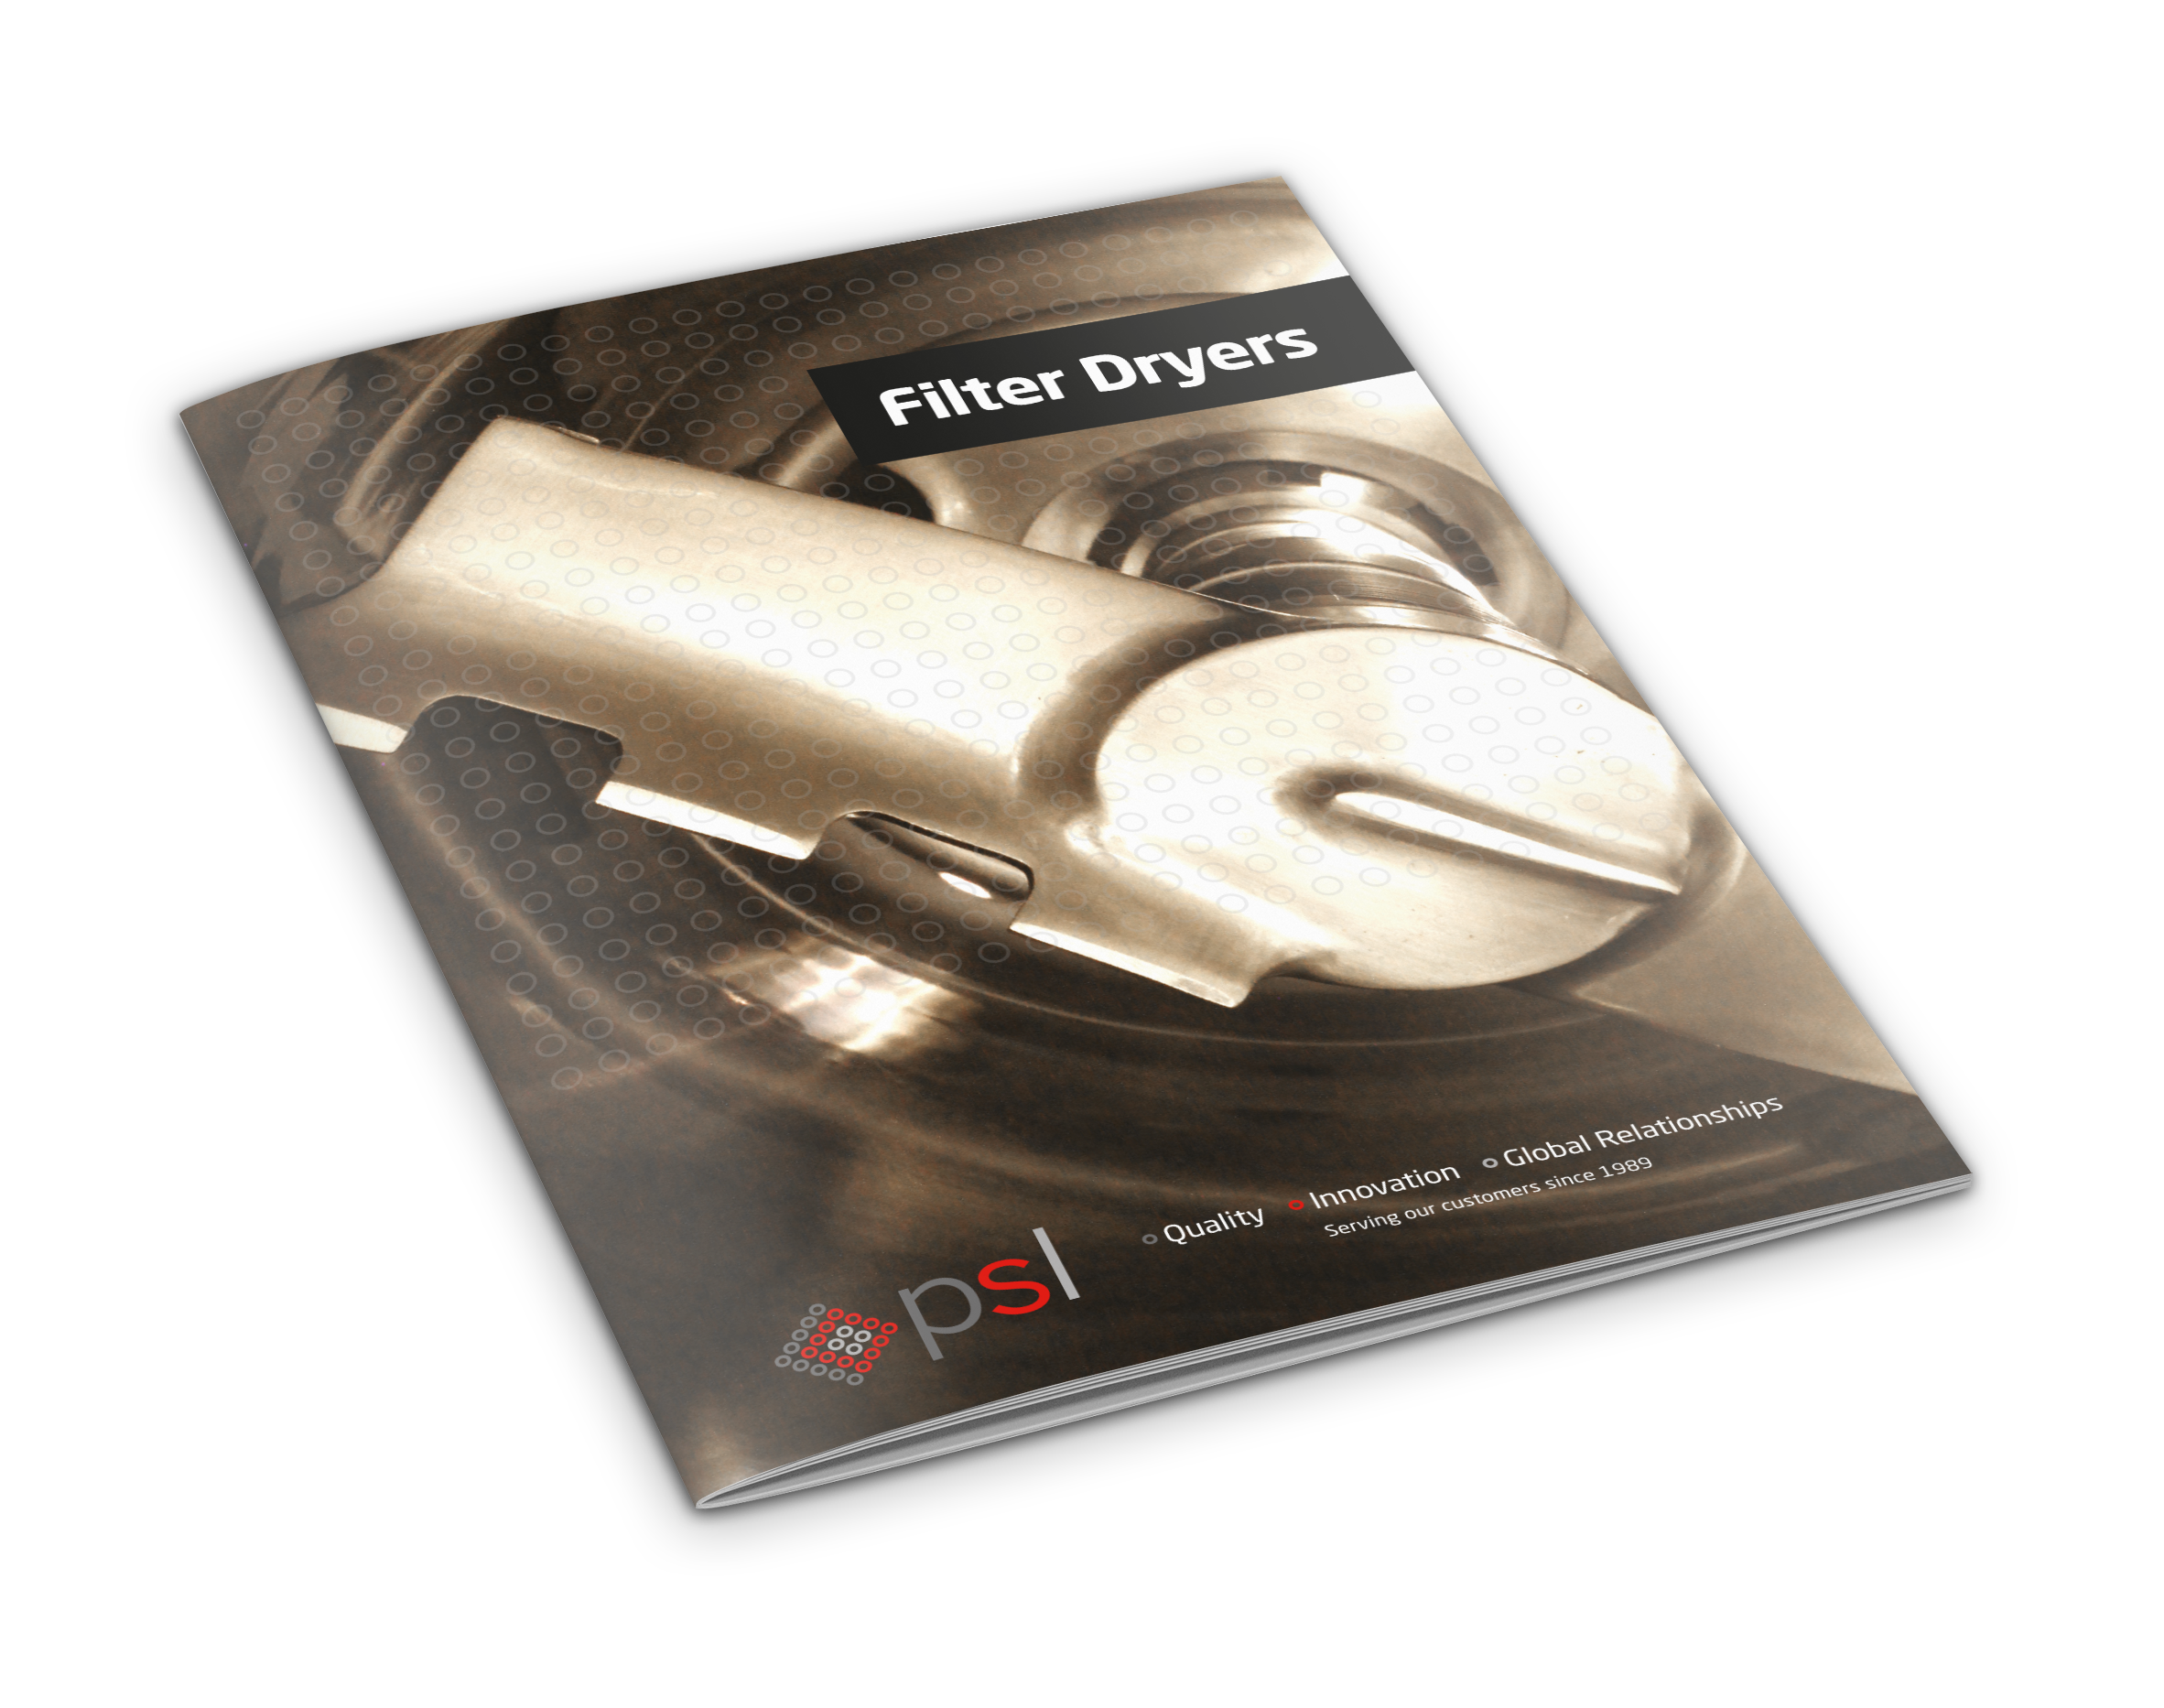 Filter Dryer Brochure Cover